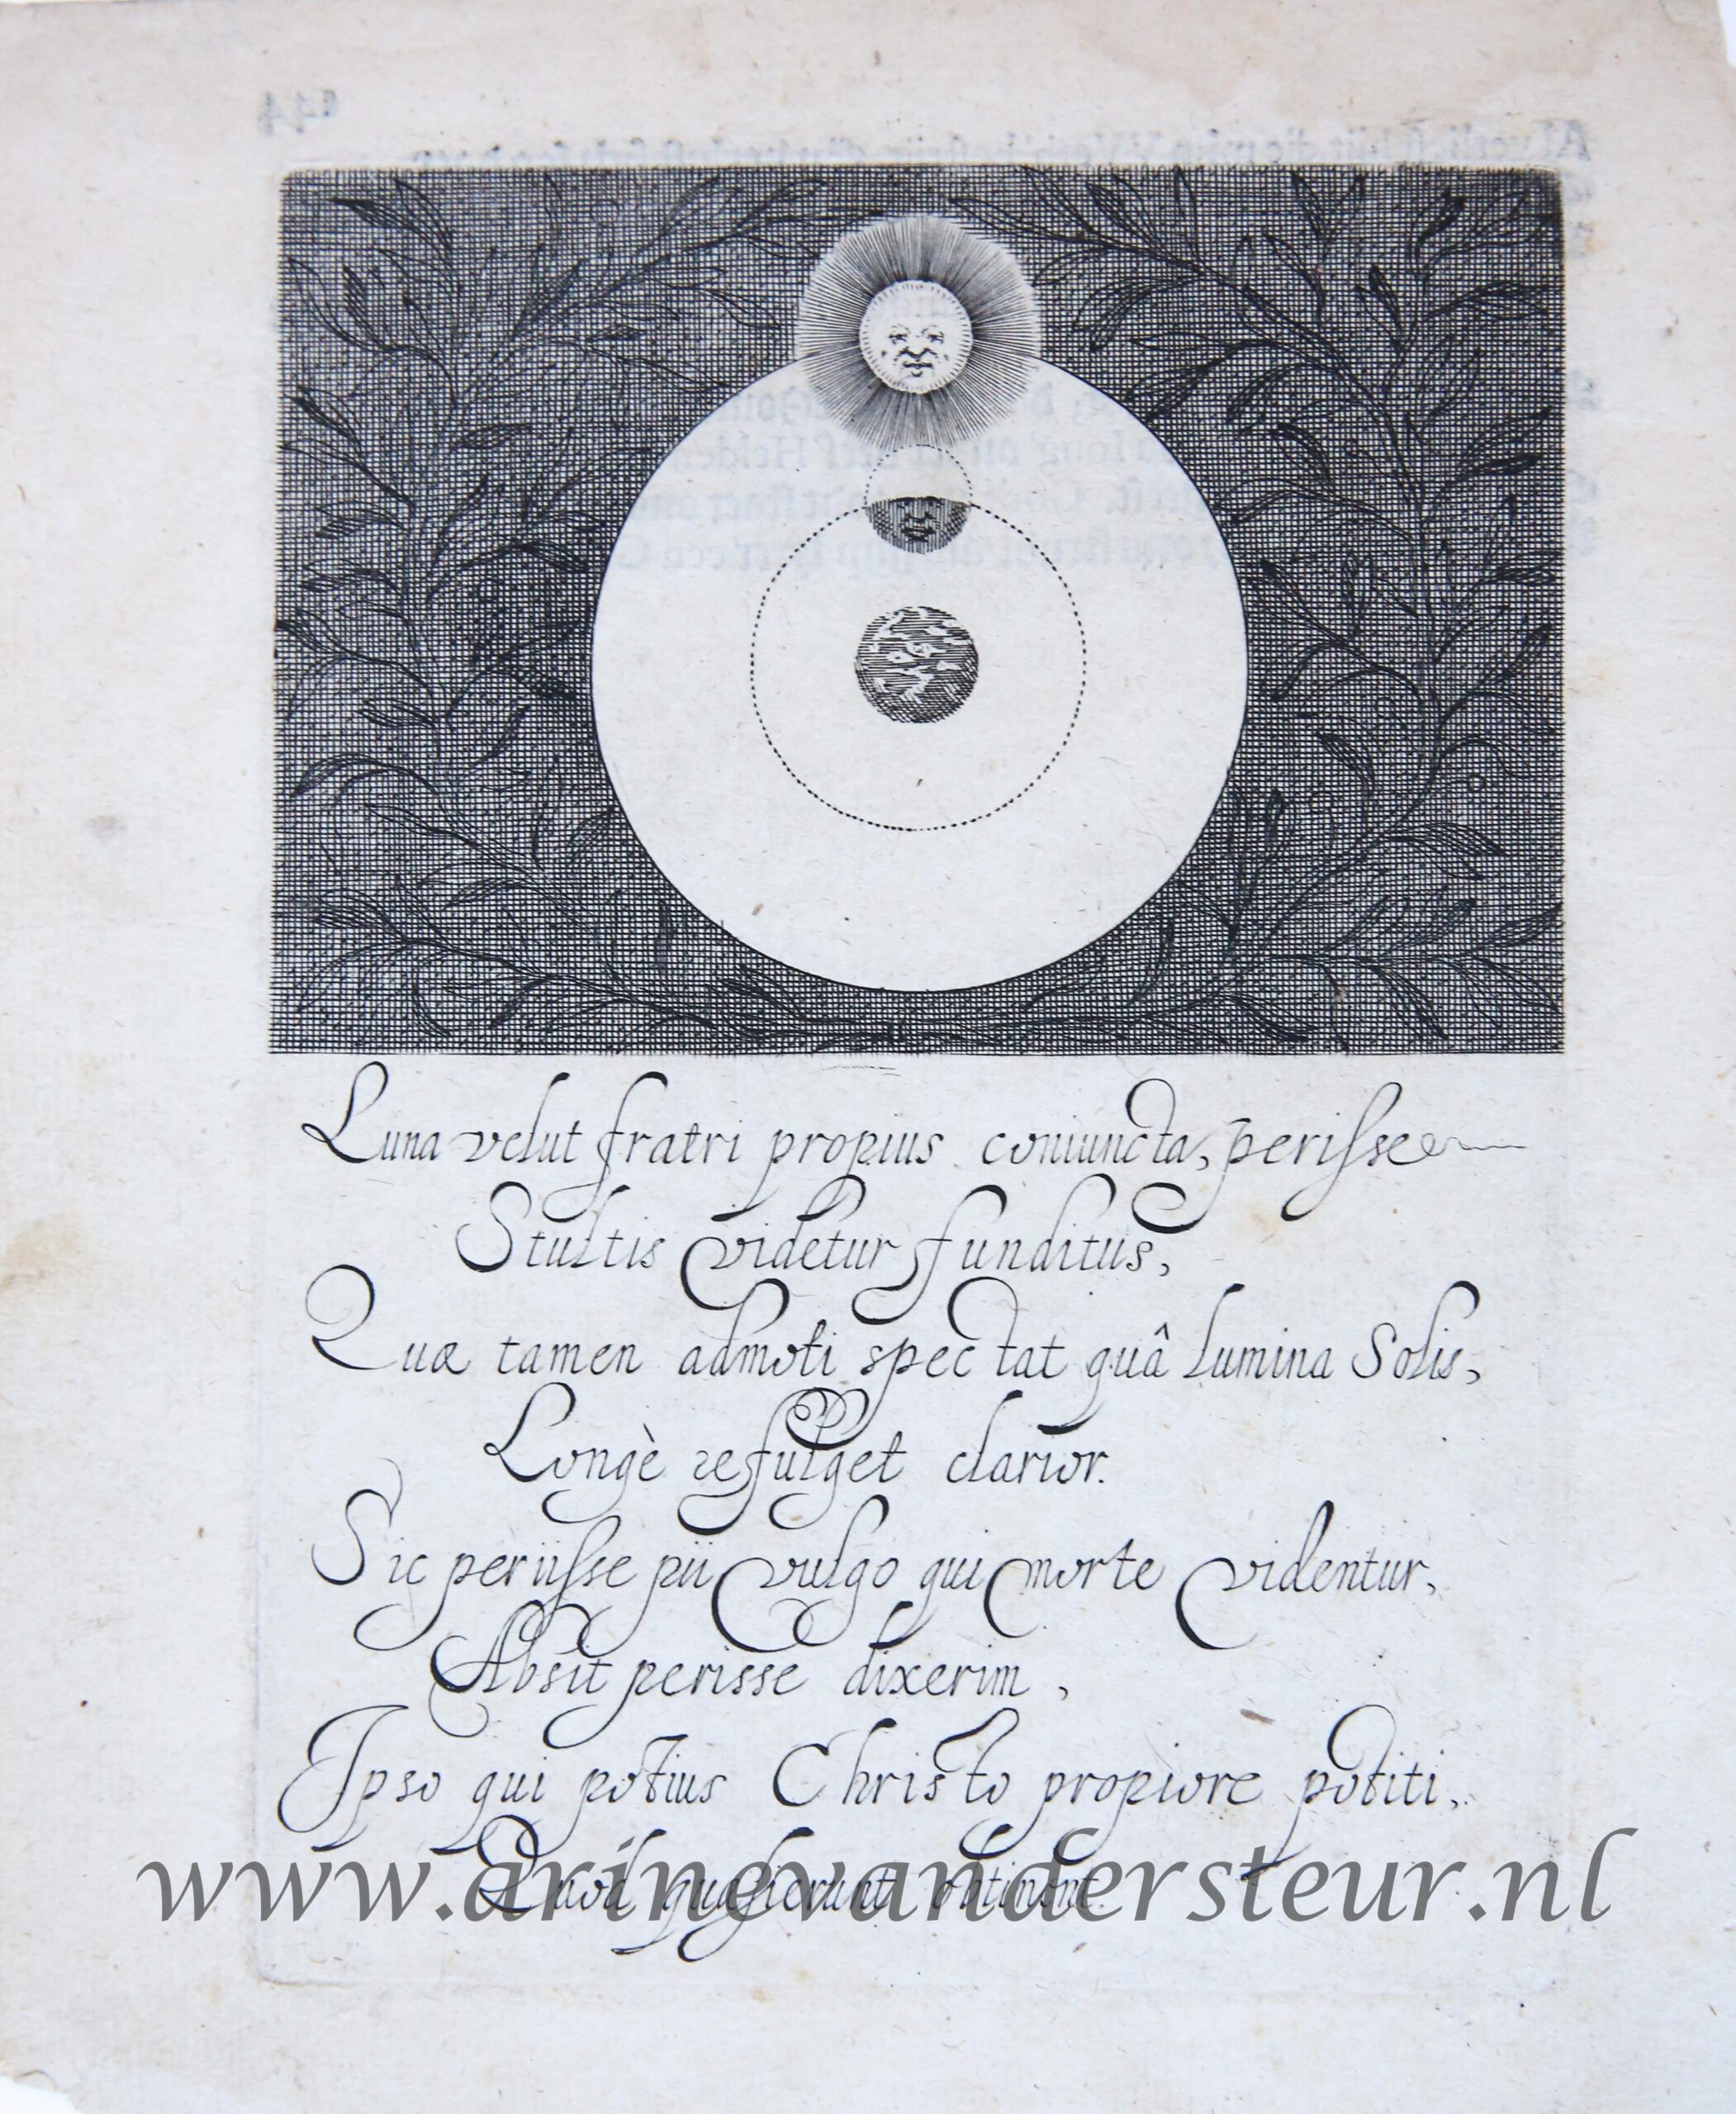 [Antique print, etching and engraving] The New Moon [allegory of Protestantism]/De nieuwe maan, allegorie voor het Protestantisme, published 1600-1650.